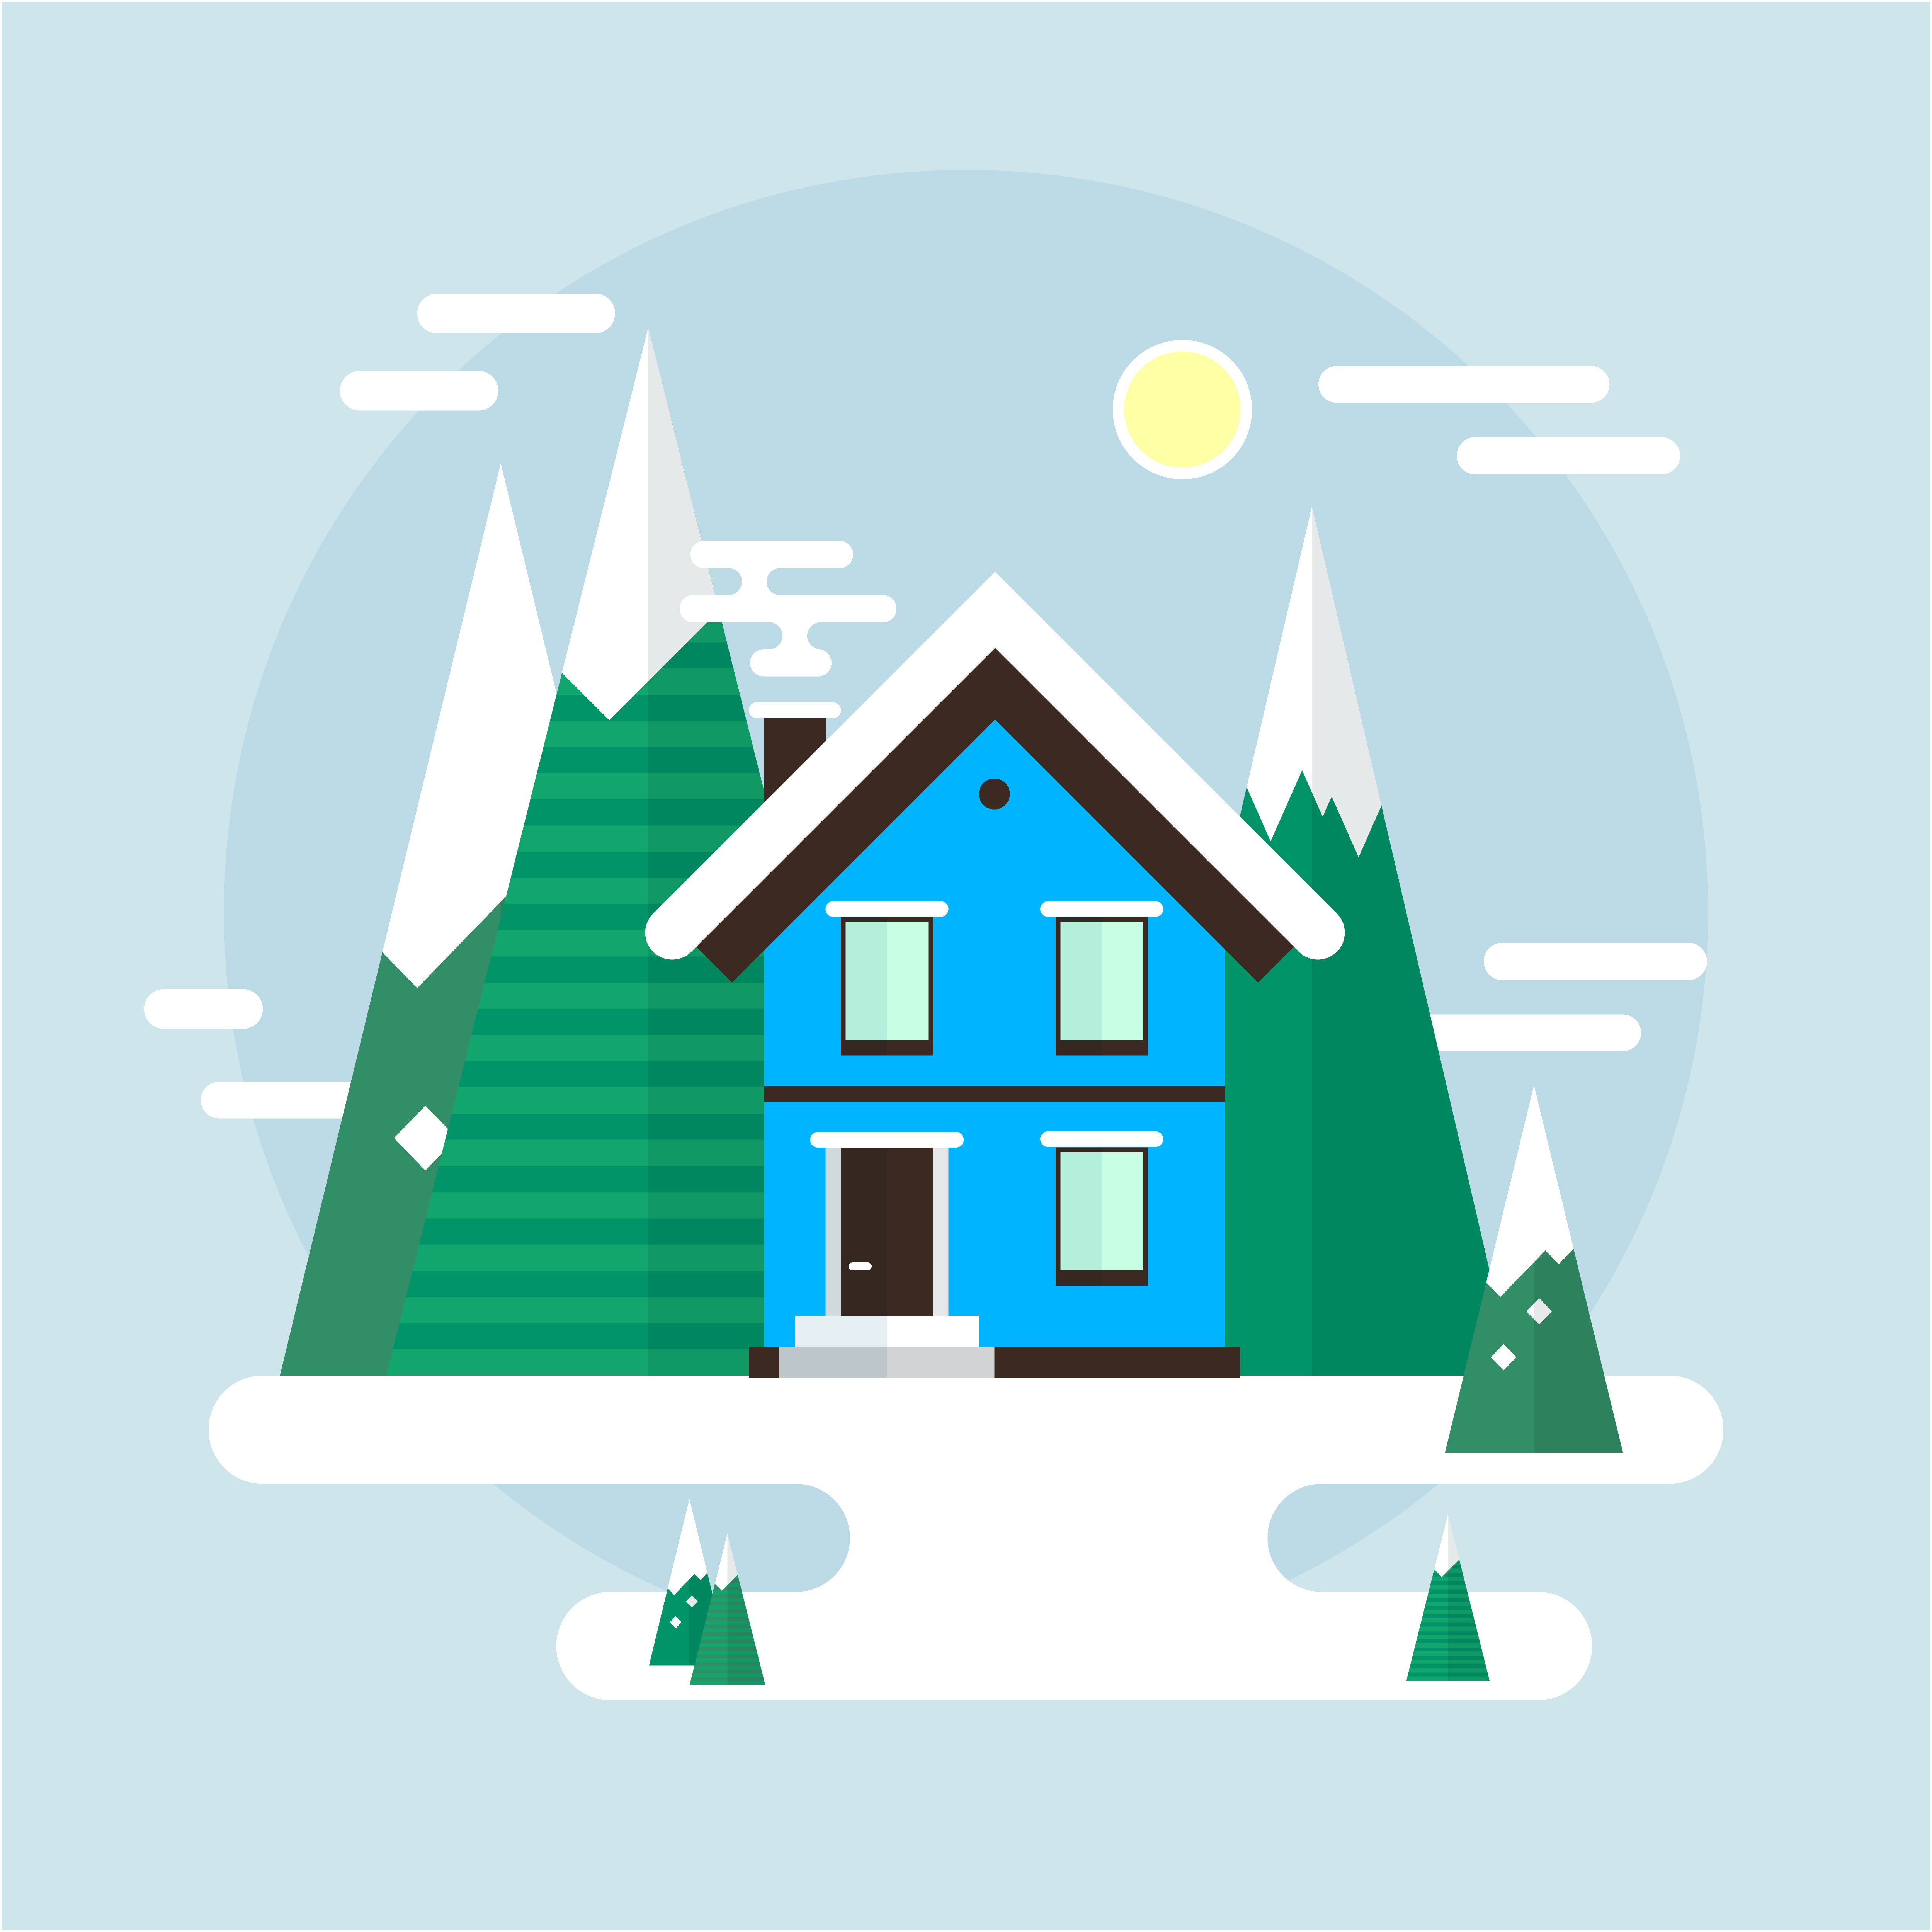 Winter Model Home Image